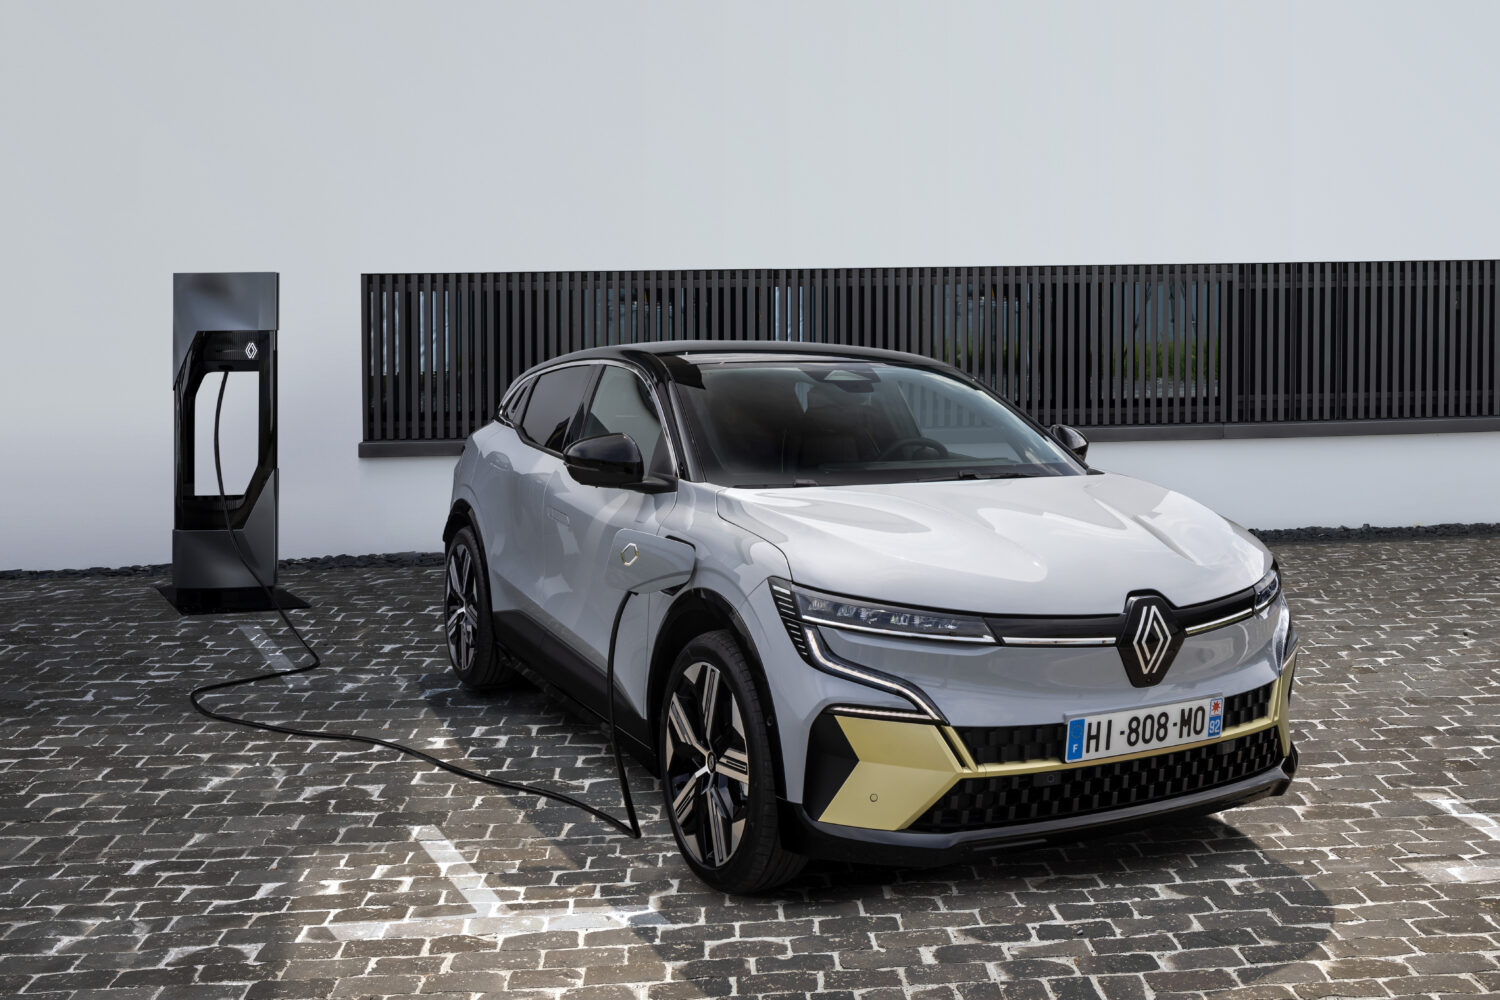 2021 - Nouvelle Renault Mégane E-TECH Electric - Urbain..jpeg